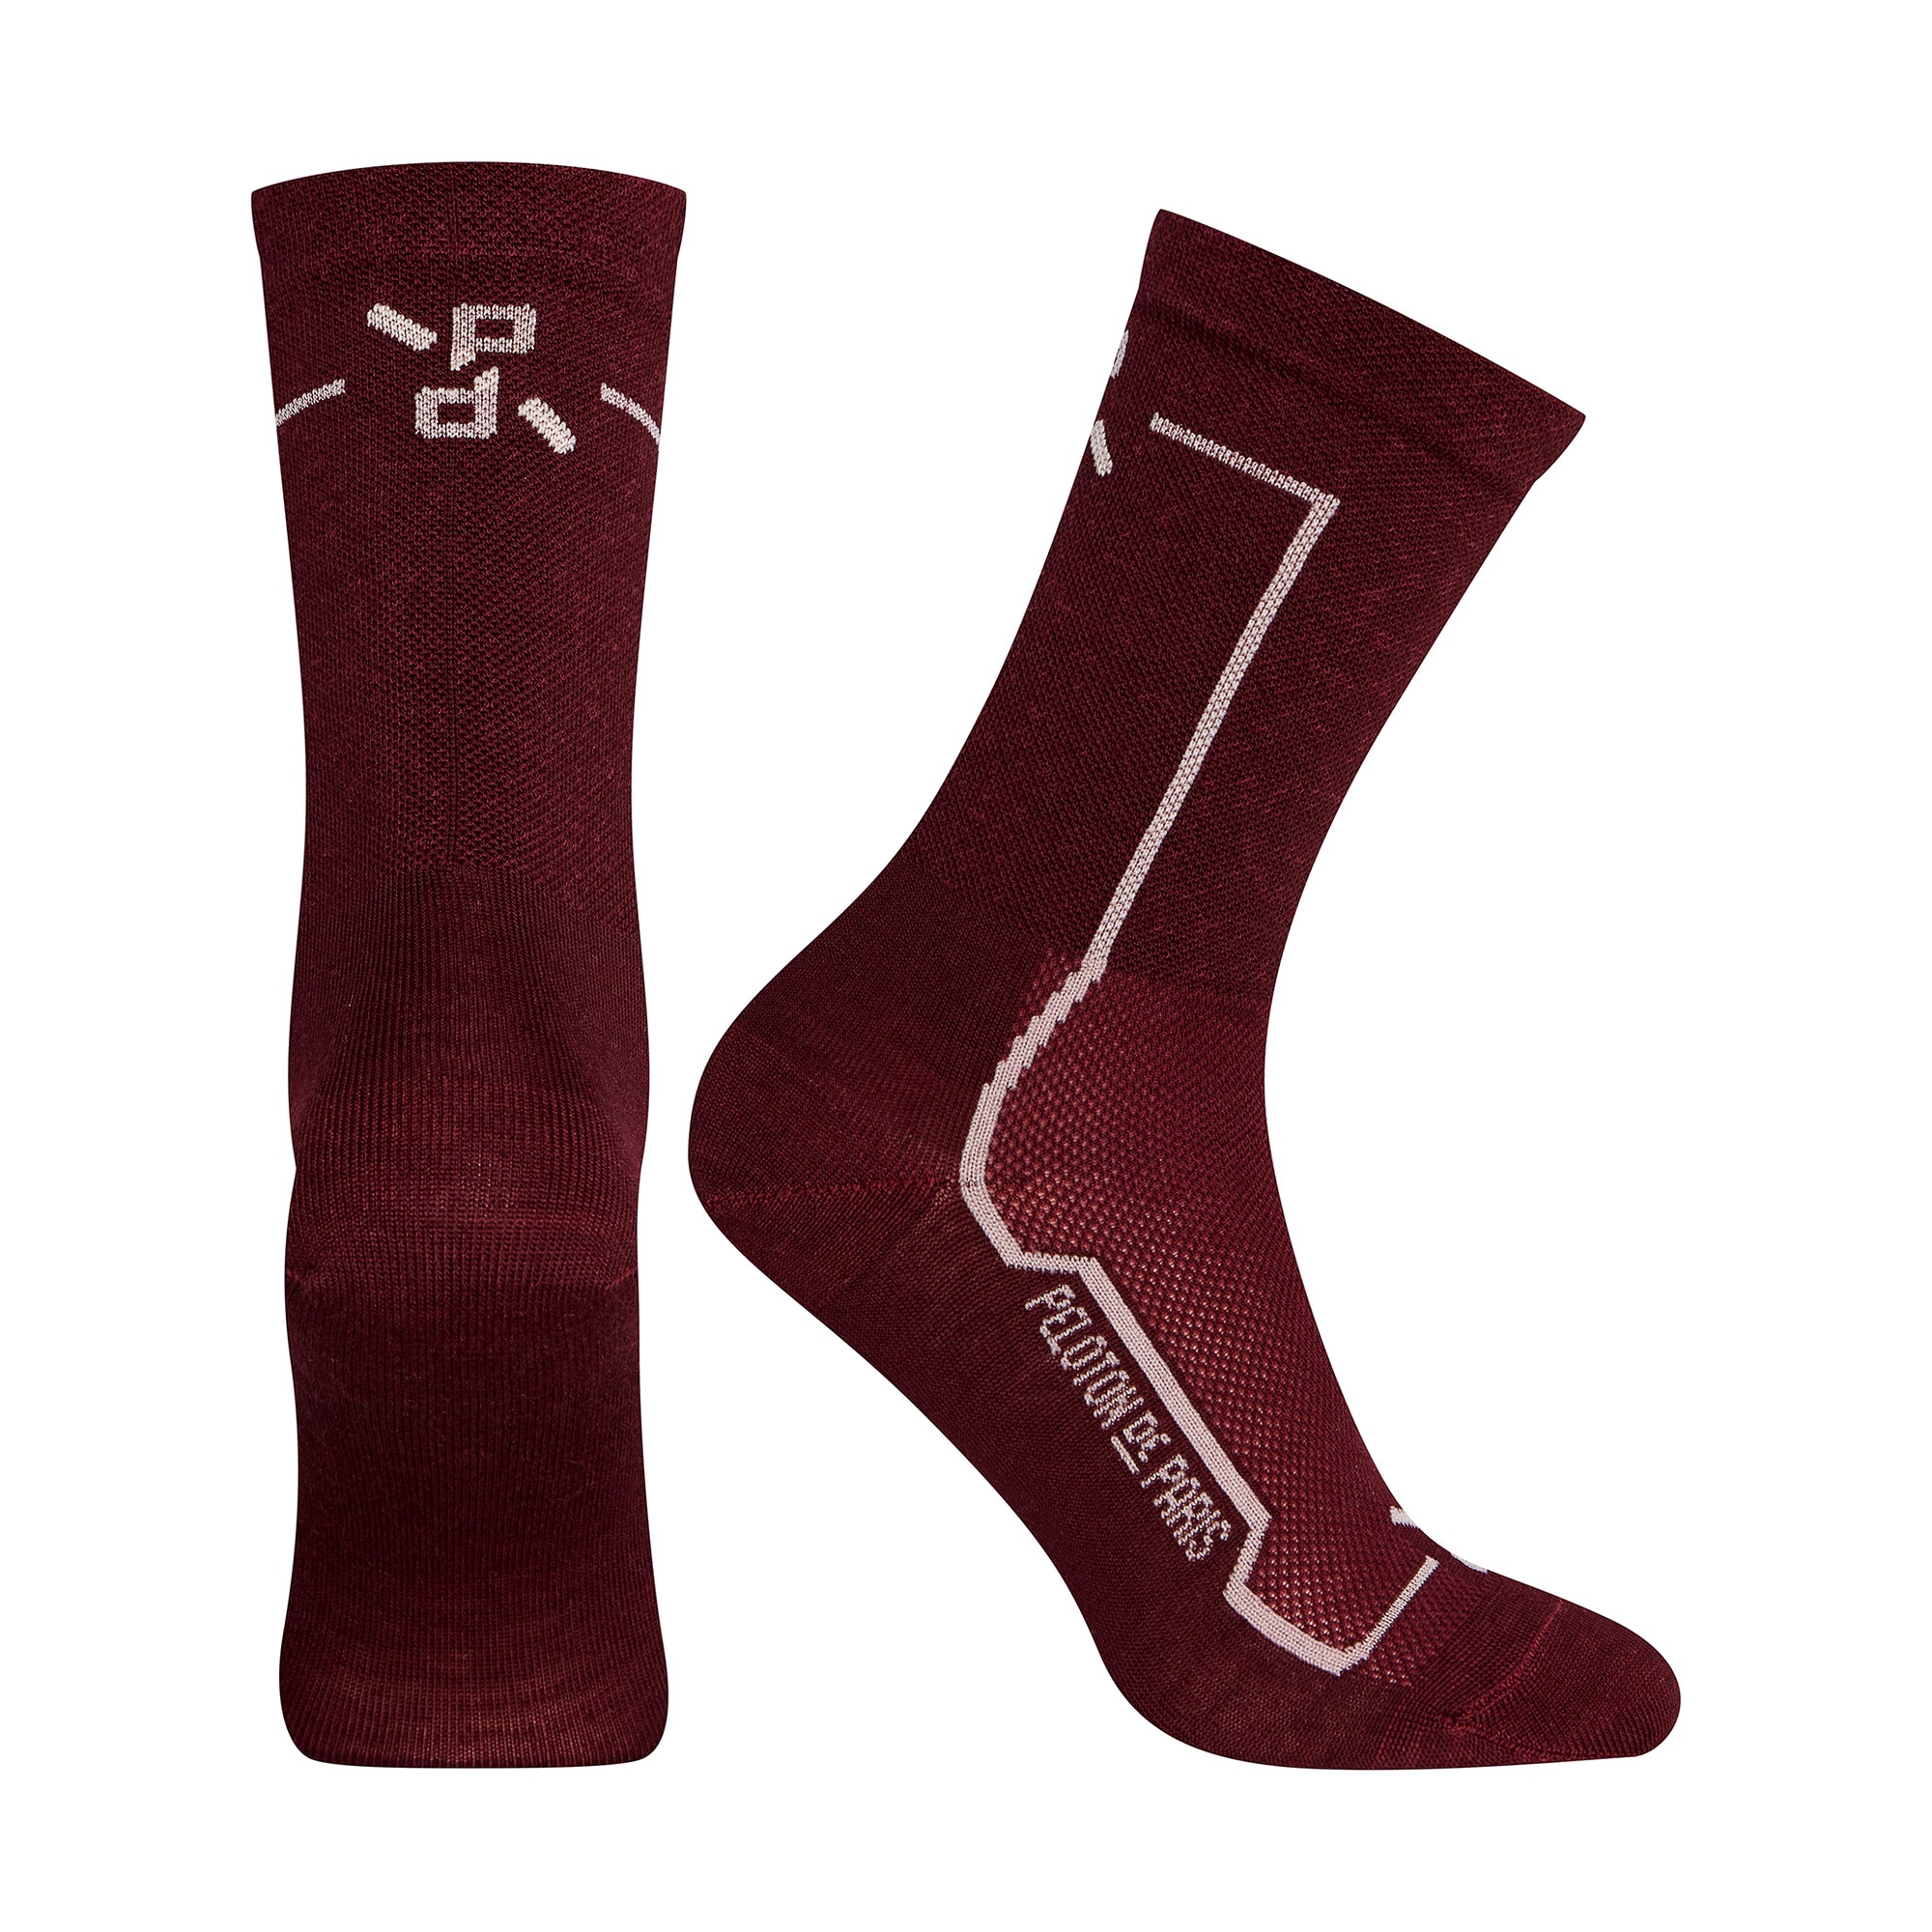 Peloton de Paris socks | Burgundy